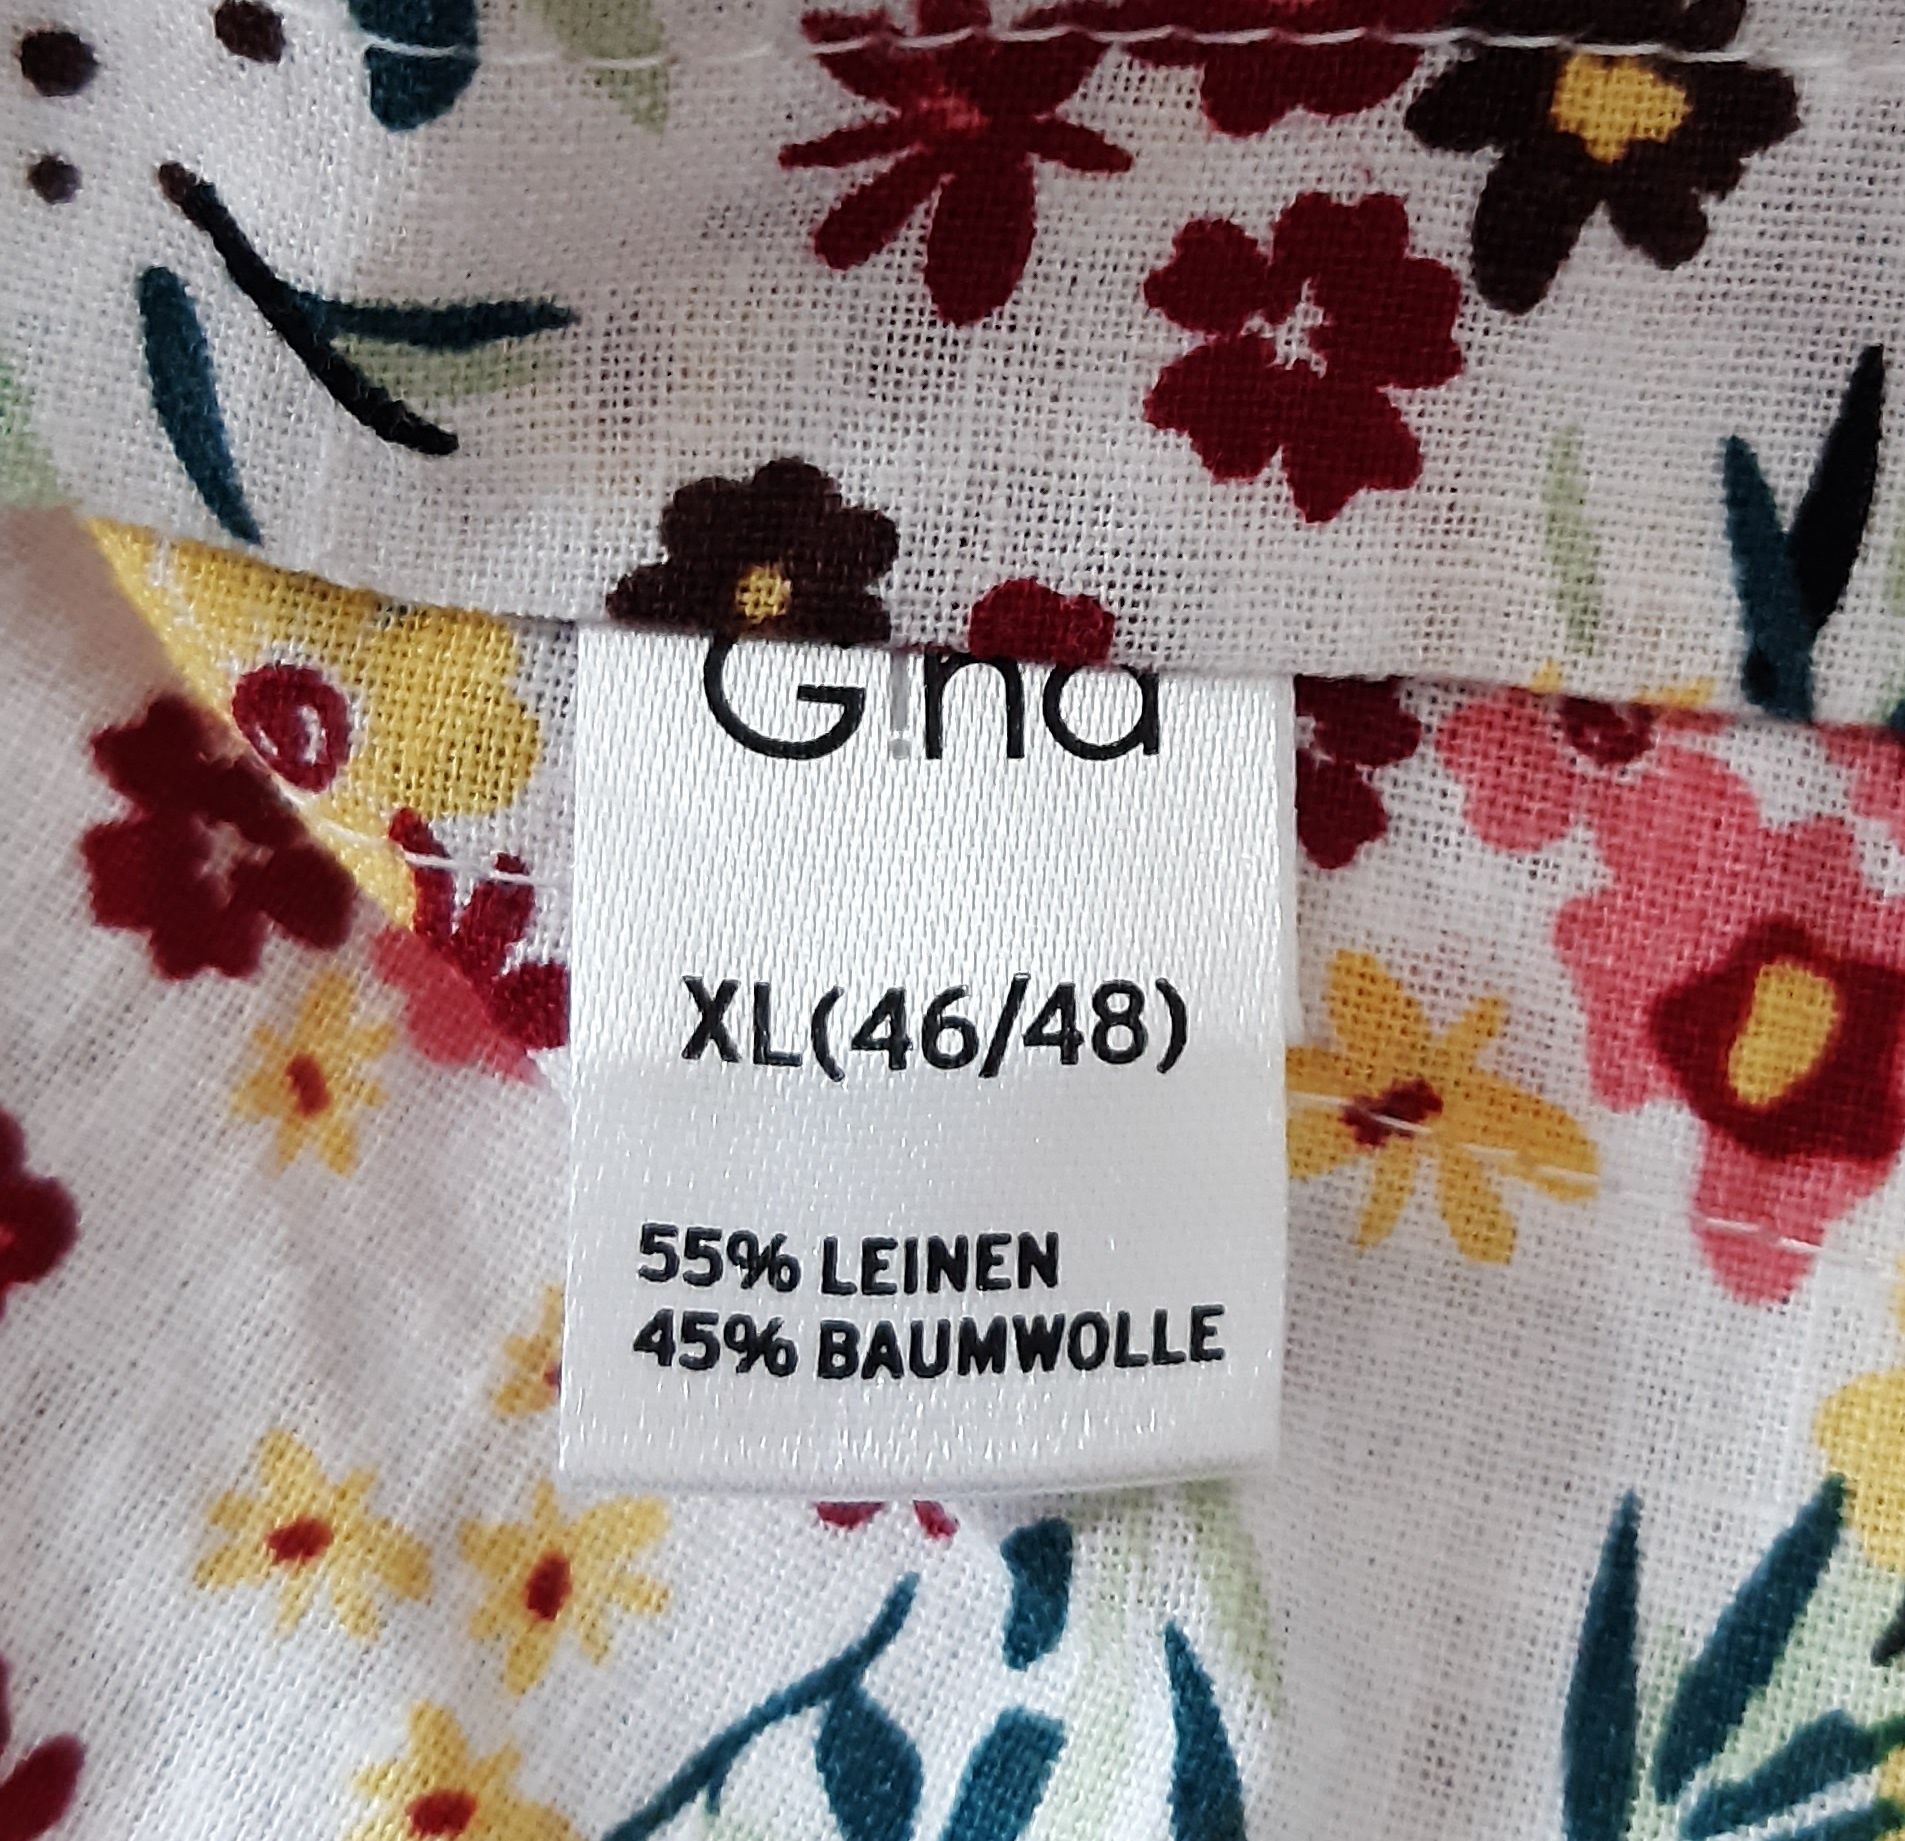 Letnia koszulka na ramiączkach, 55% len, 45% bawełna, G!na, XL (46/48)